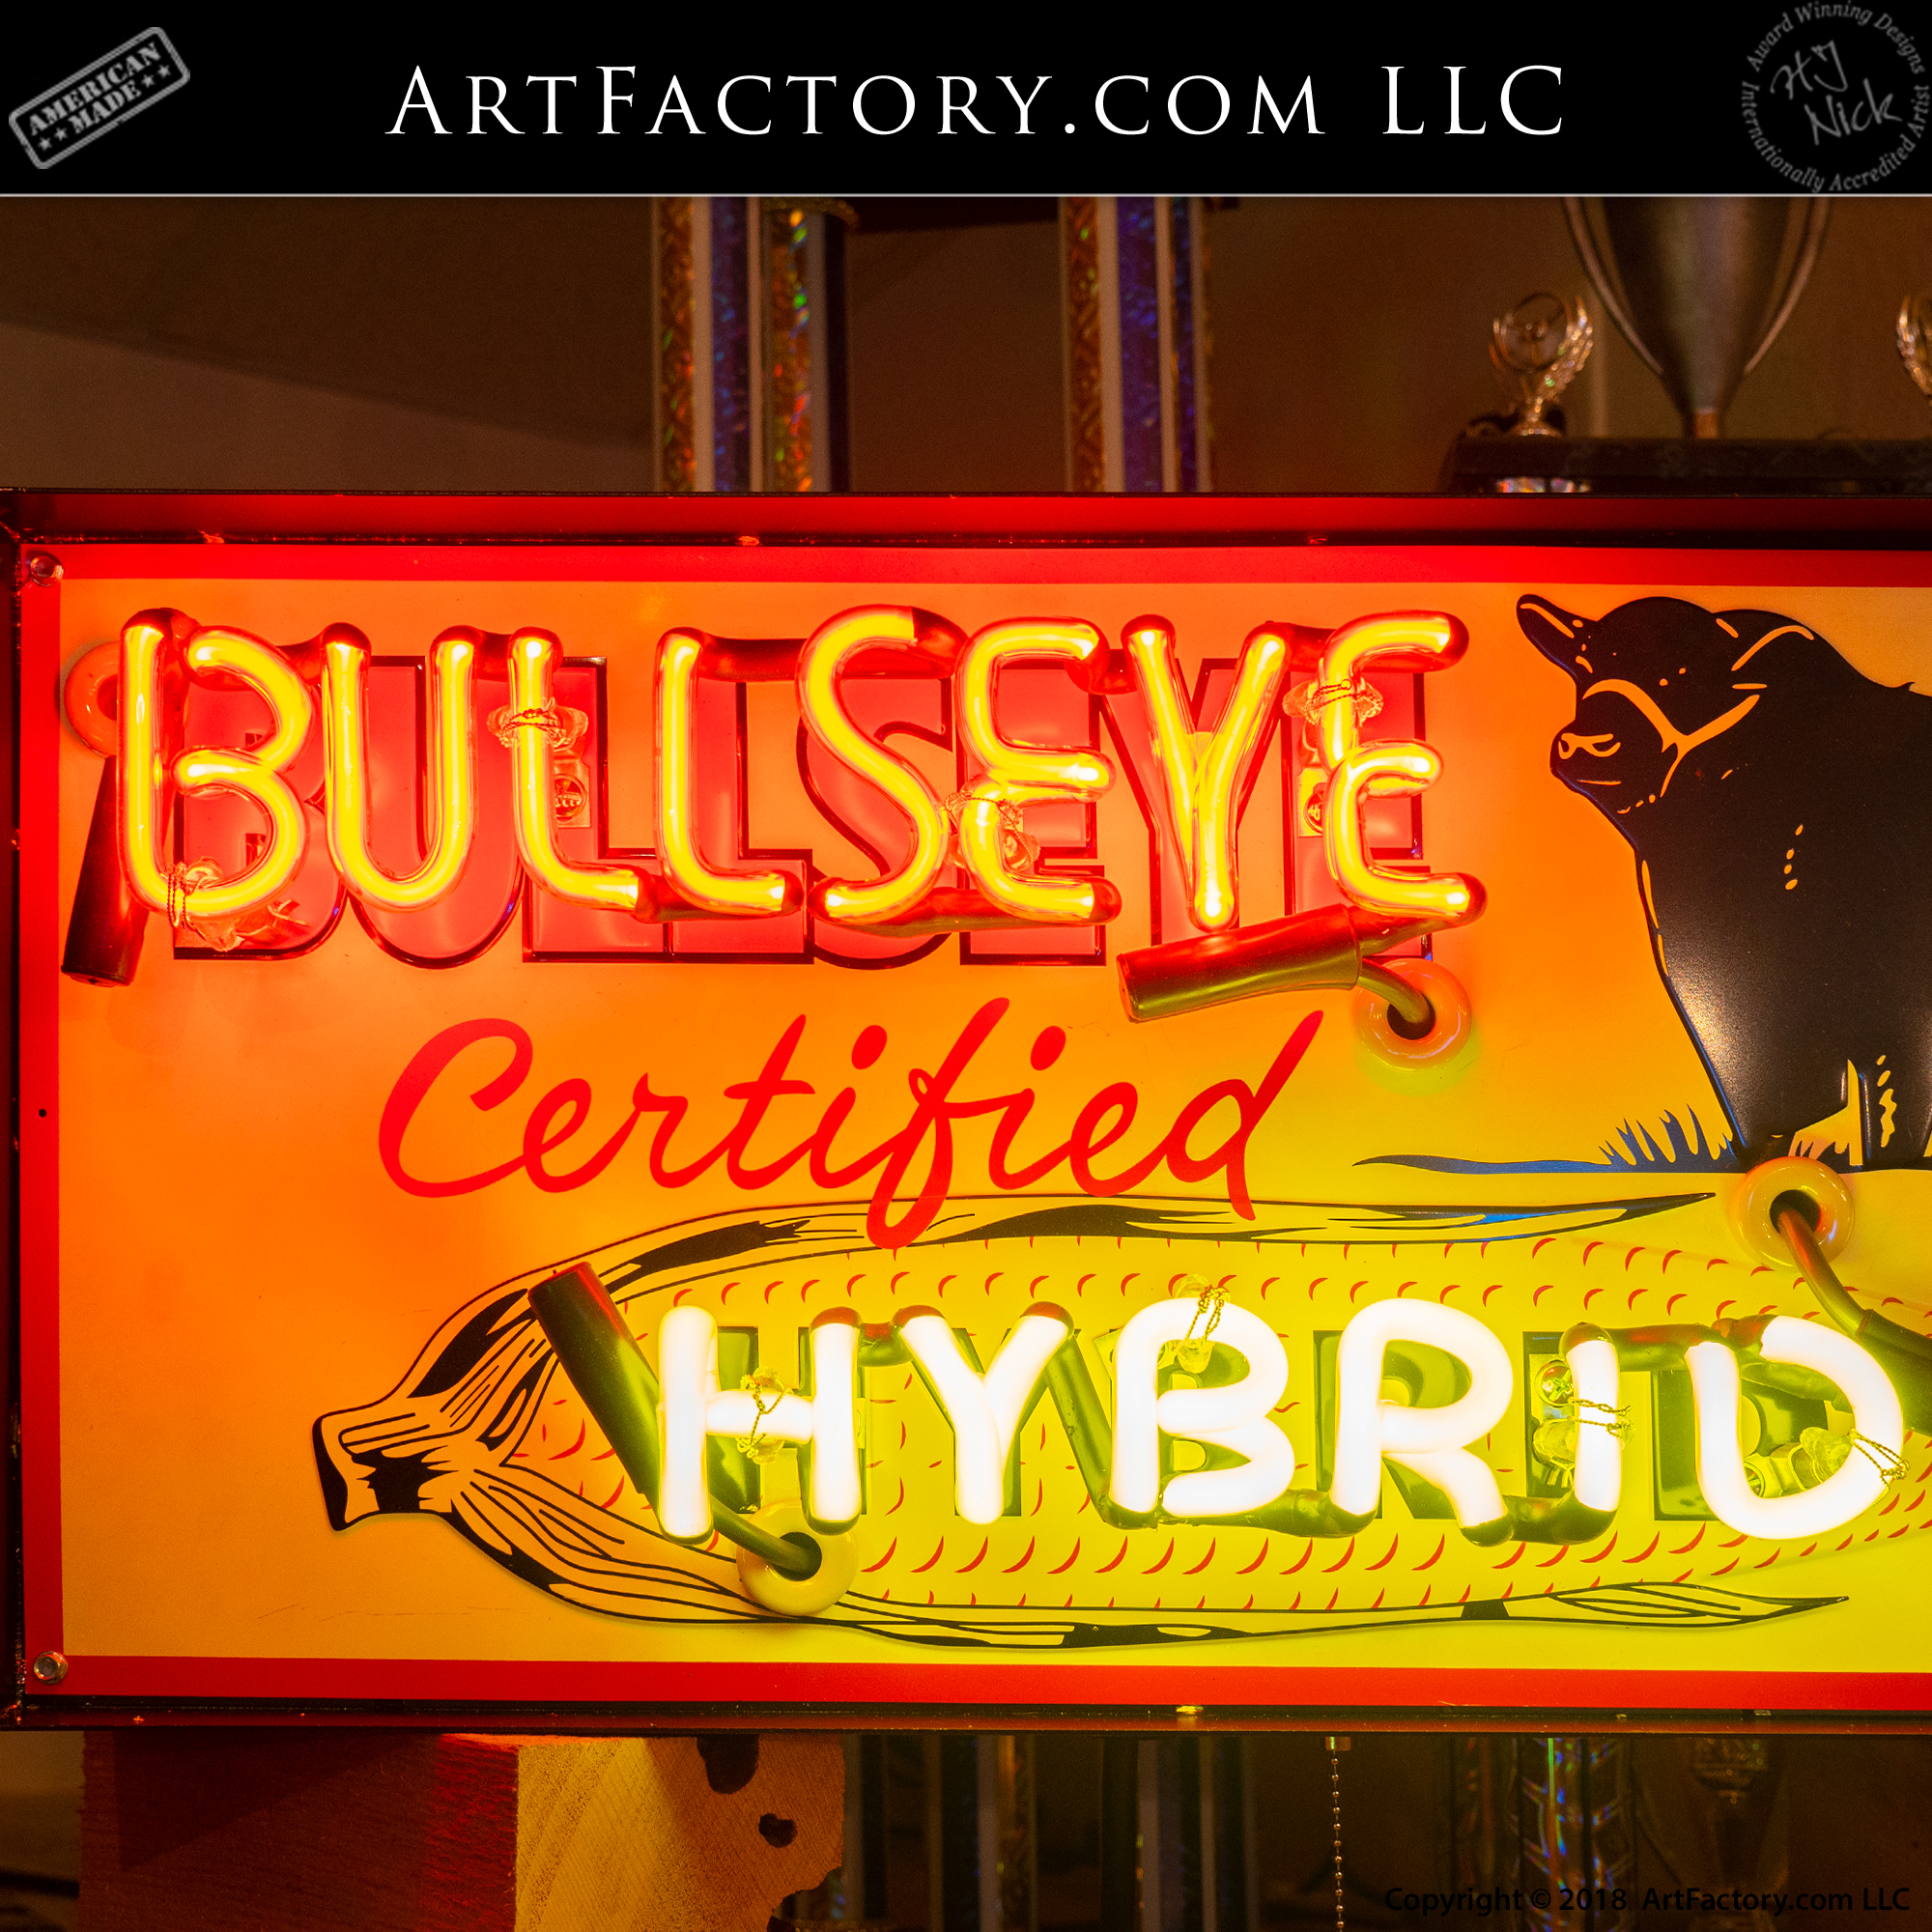 Bullseye Certified Hybrid Corn Neon Sign